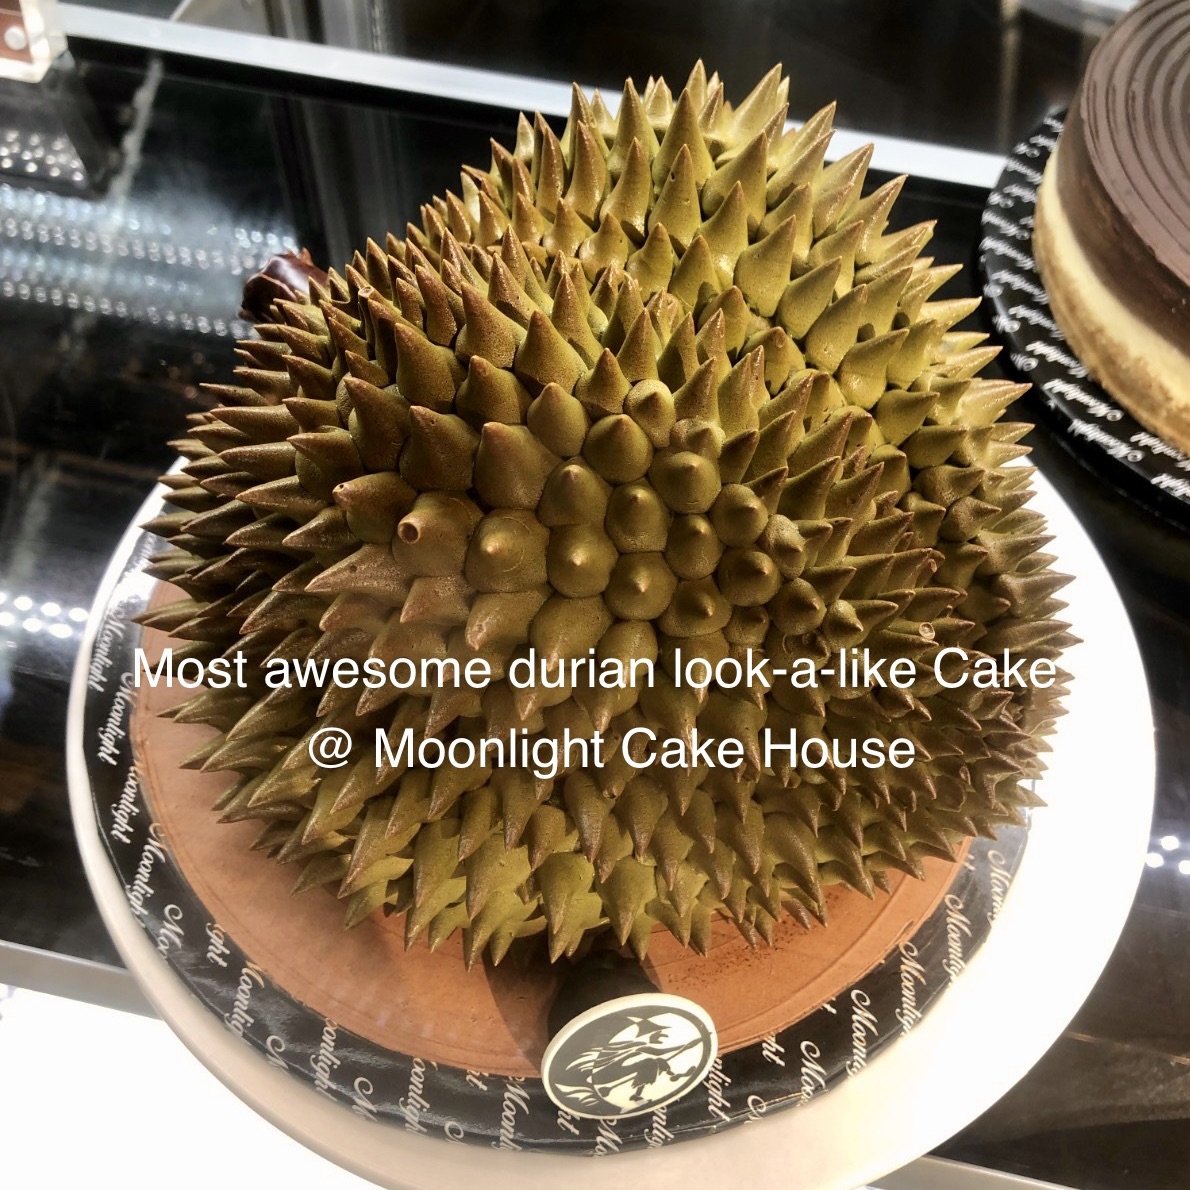 𝐉𝐁 𝐌𝐃𝐀𝐘 𝐈𝐒 𝐁𝐀𝐂𝐊‼ 📆𝟏𝟐 𝐀𝐩𝐫𝐢𝐥 𝟐𝟎𝟐𝟏... - moonlight cake  house | Facebook